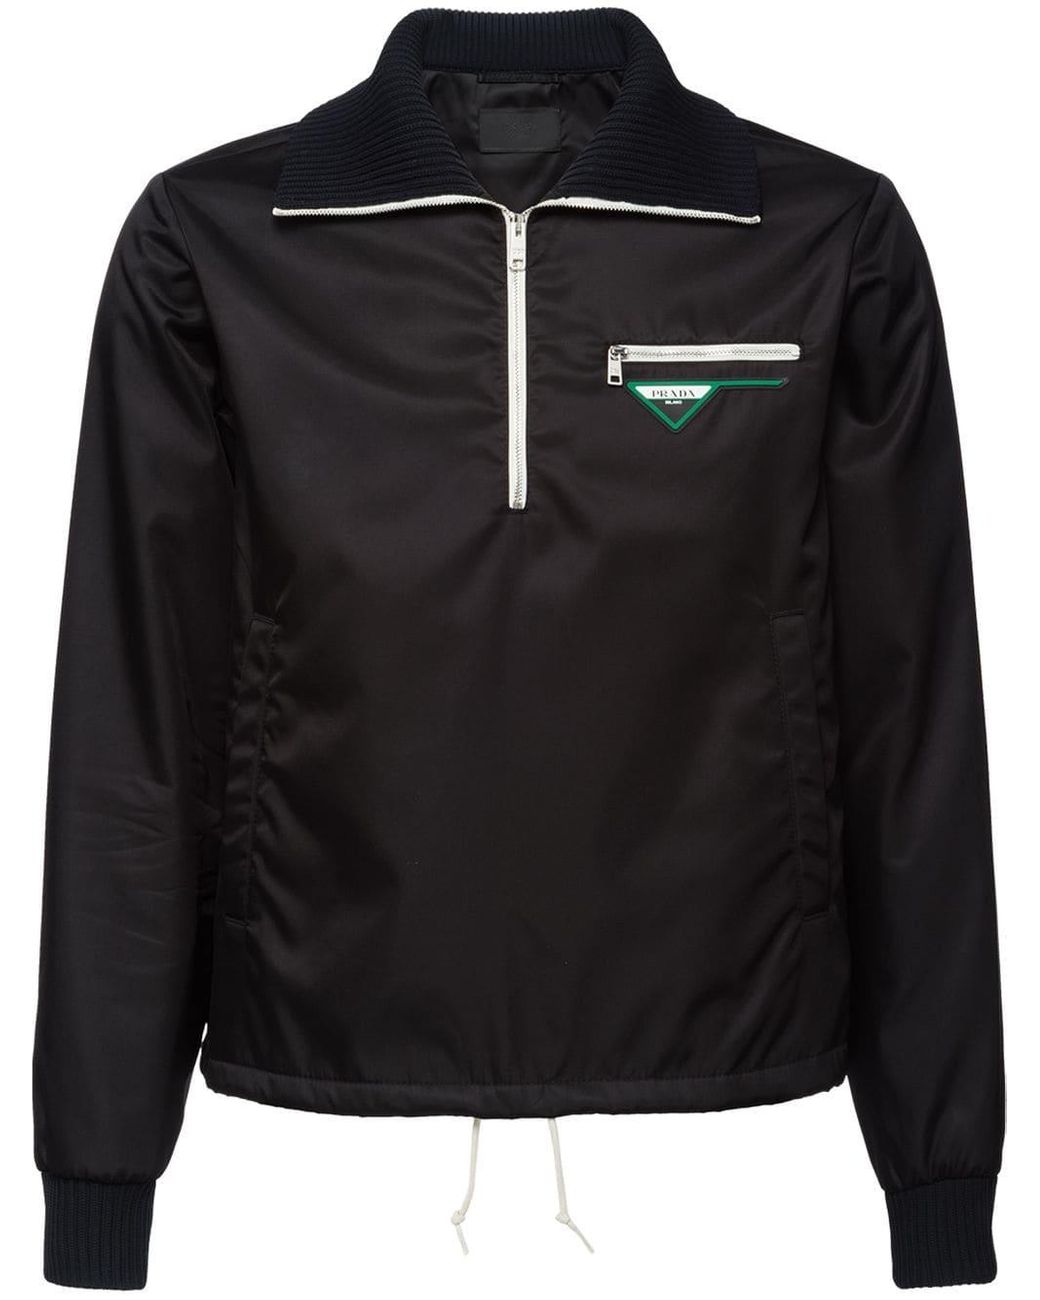 Prada Gabardine Wind Breaker Jacket in Black for Men - Lyst